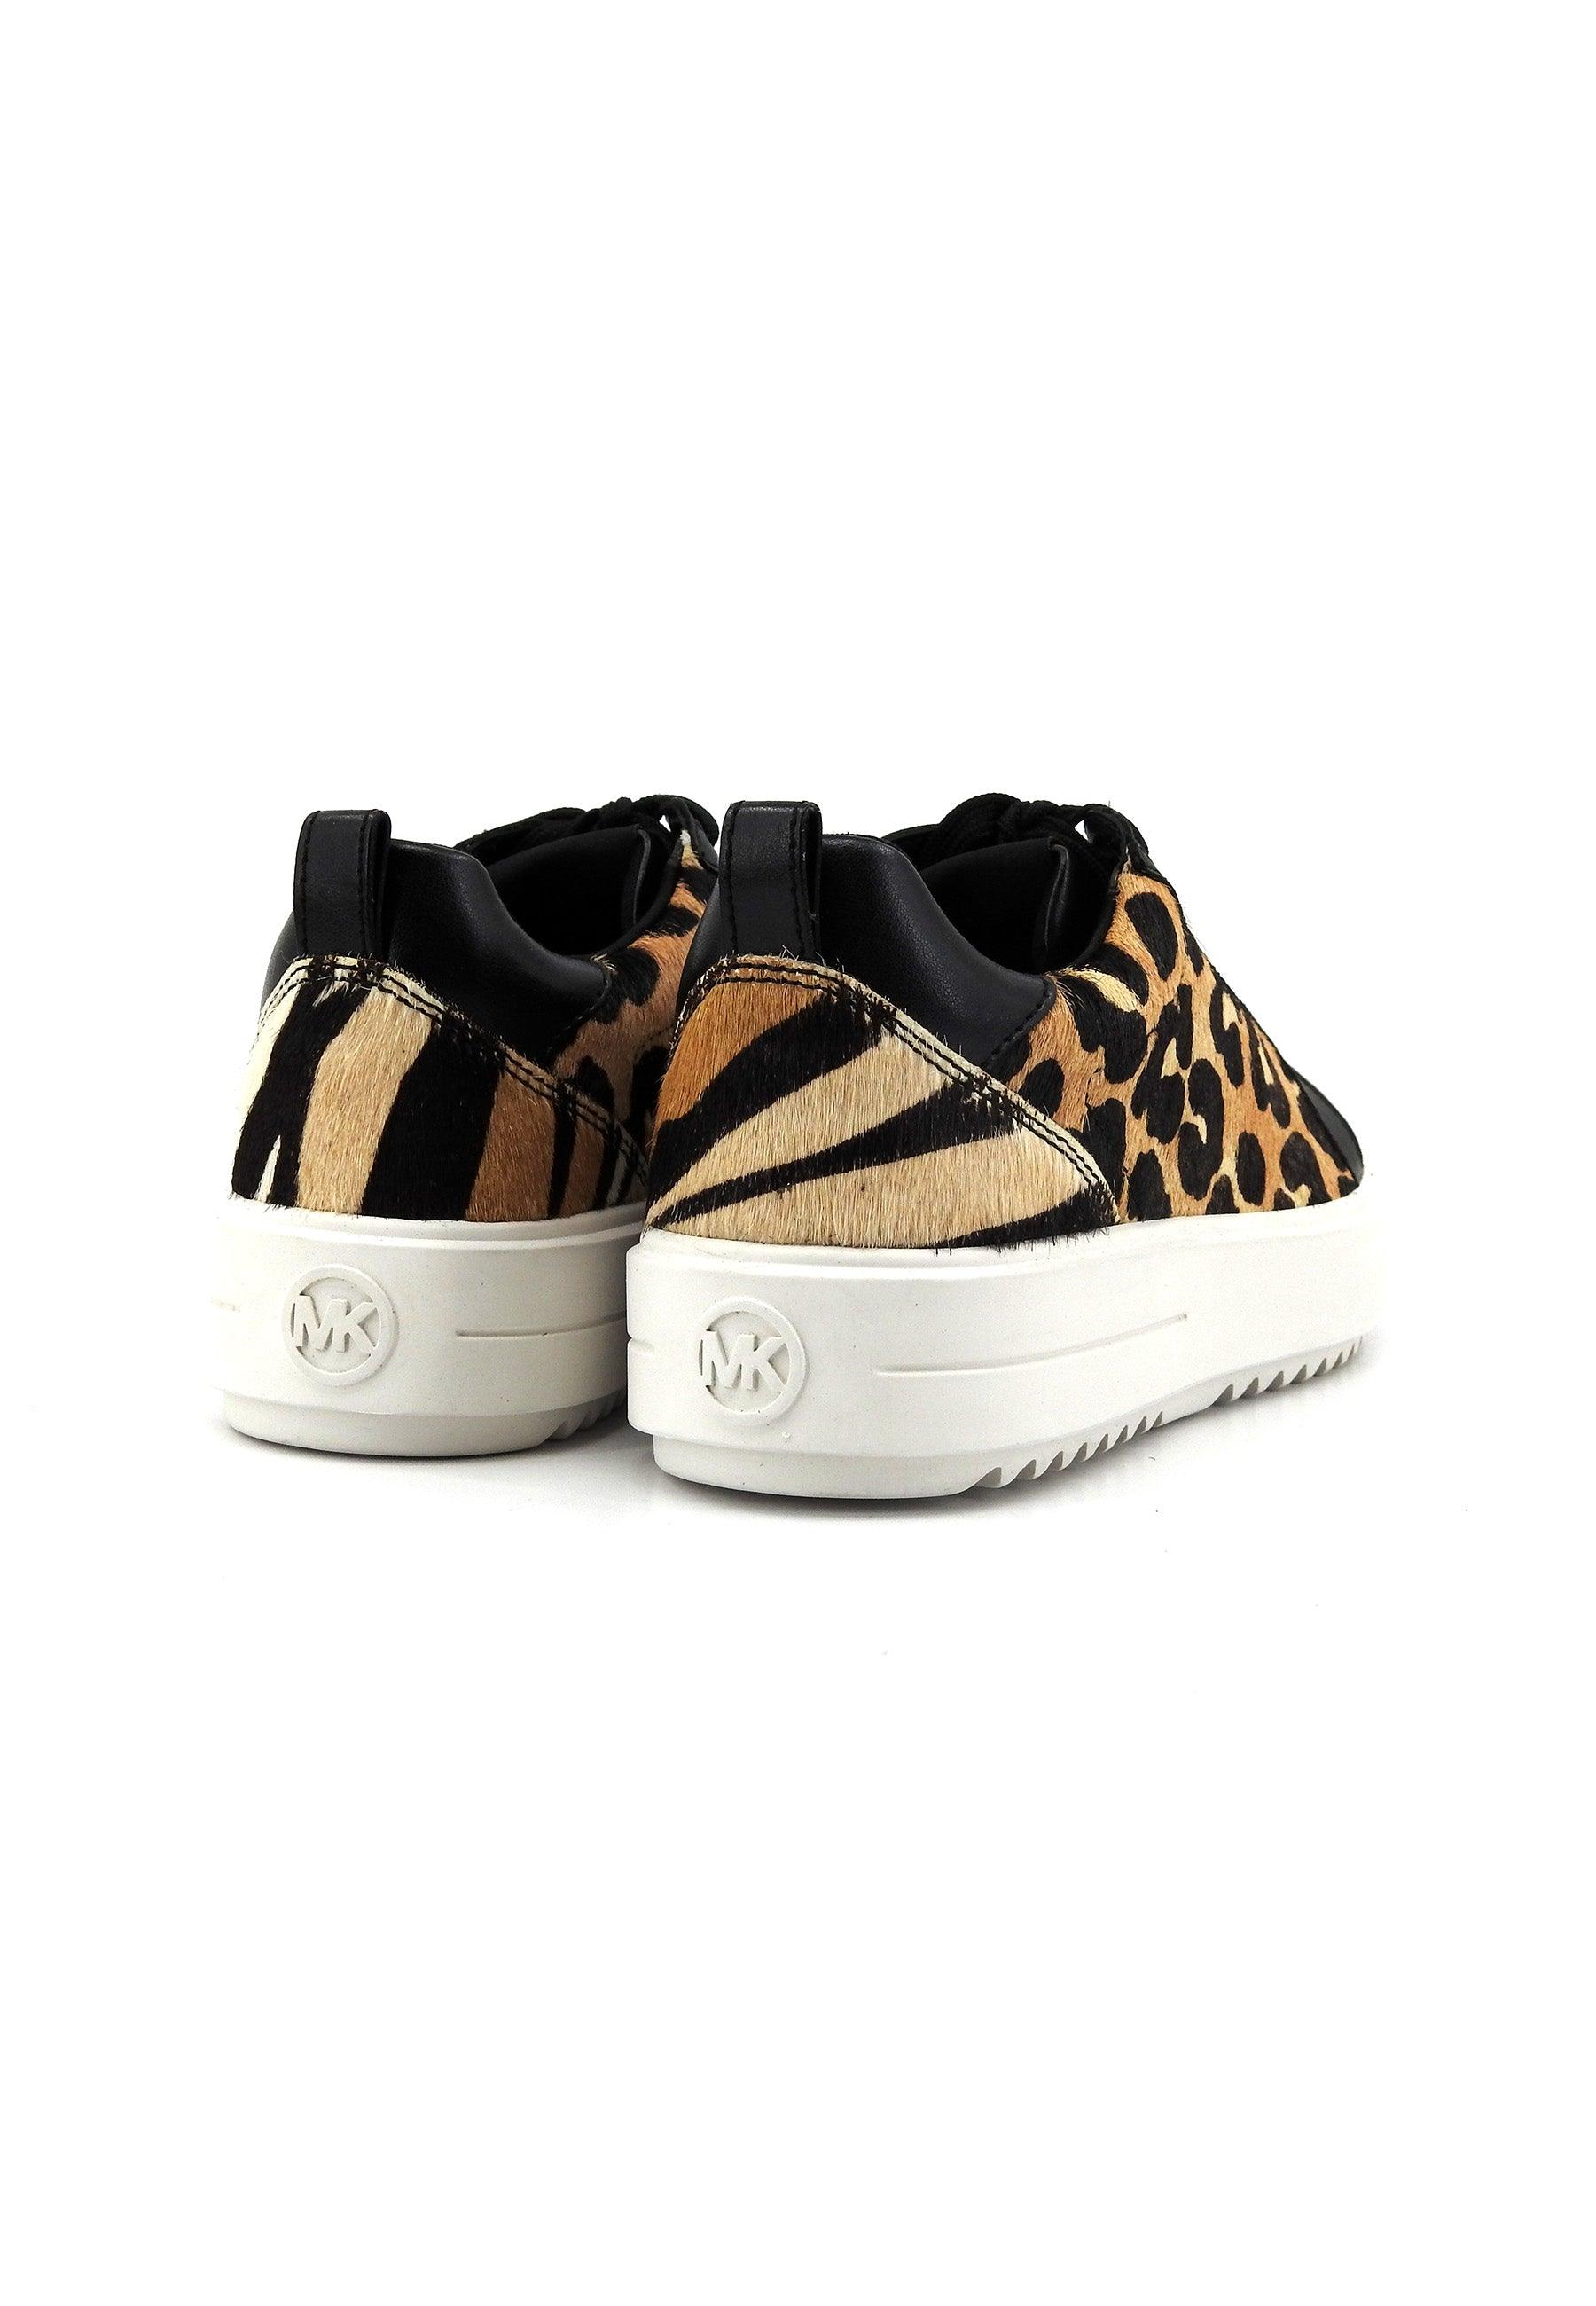 MICHAEL KORS Emmett Lace Up Sneaker Donna Black Multi Fantasia 43F3EMFS1H - Sandrini Calzature e Abbigliamento